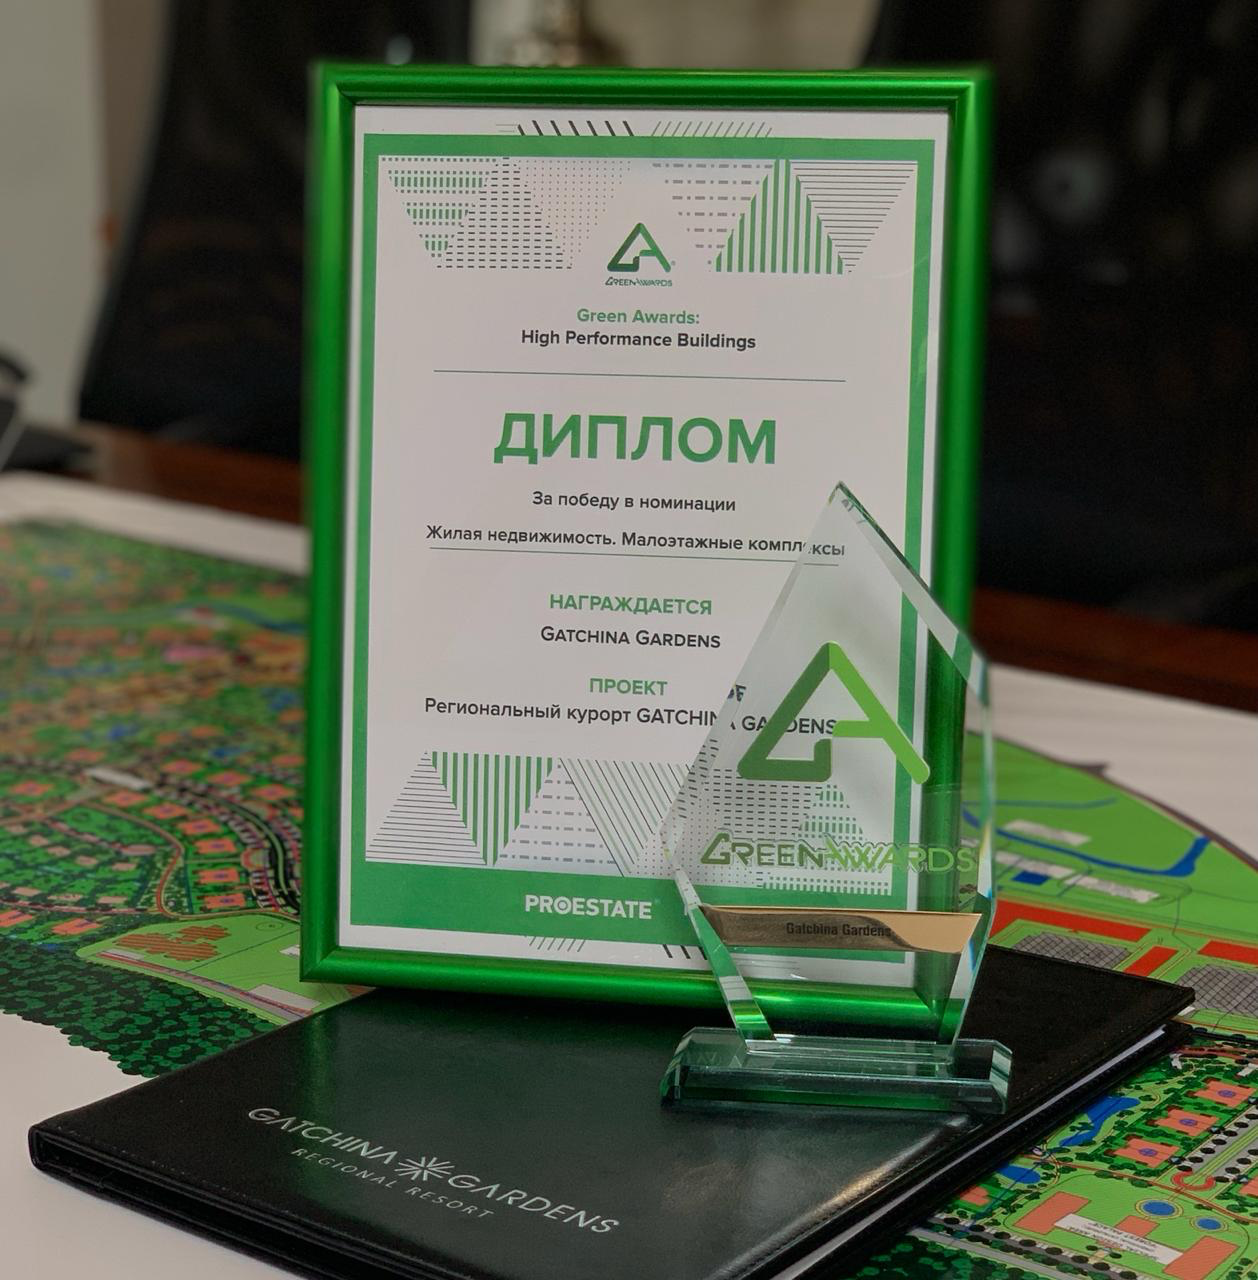 Город-курорт Gatchina Gardens стал победителем на конкурсе Green Awards